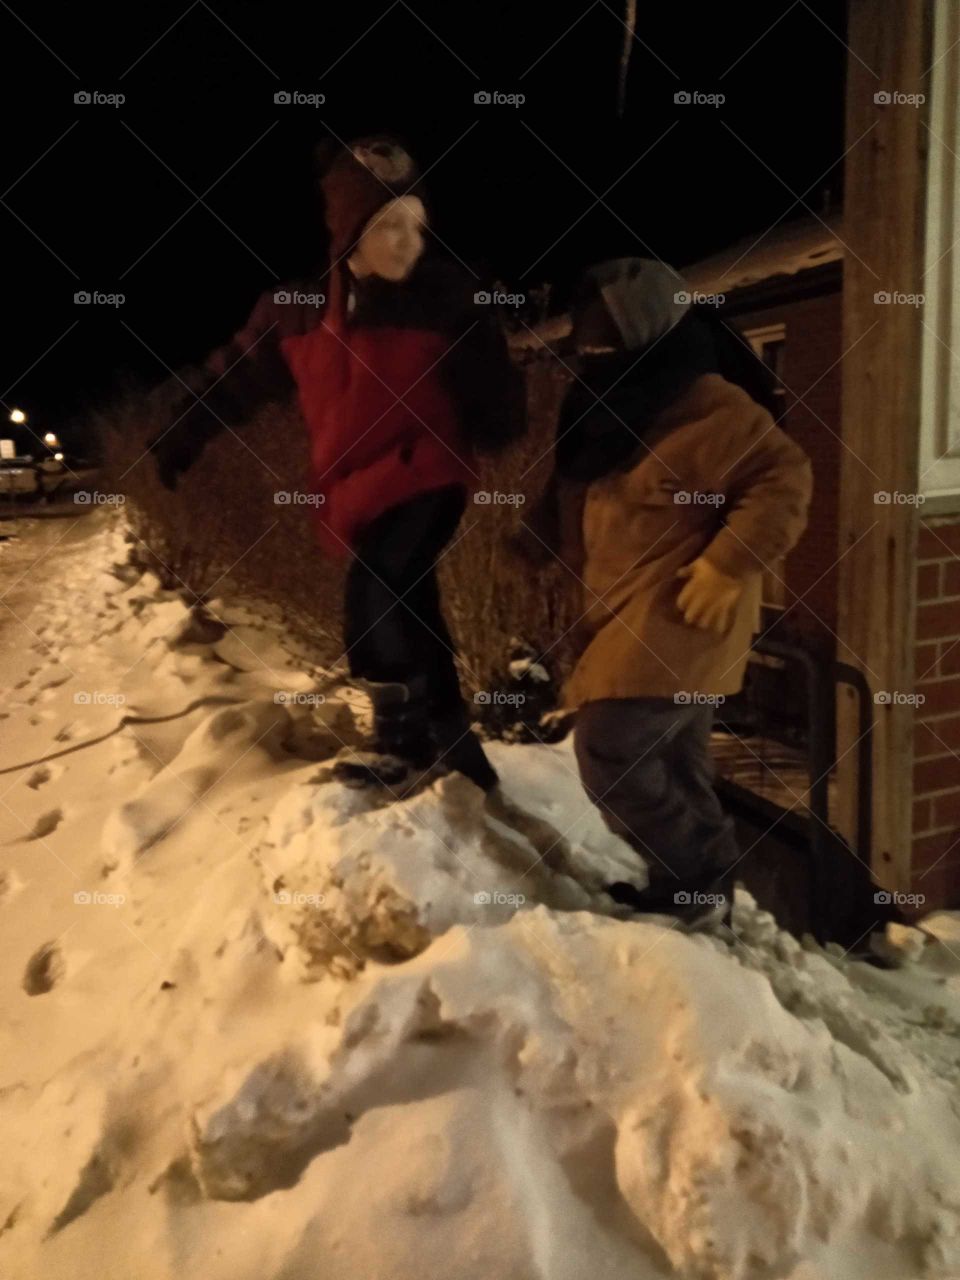 kids in snow pile nighttime.